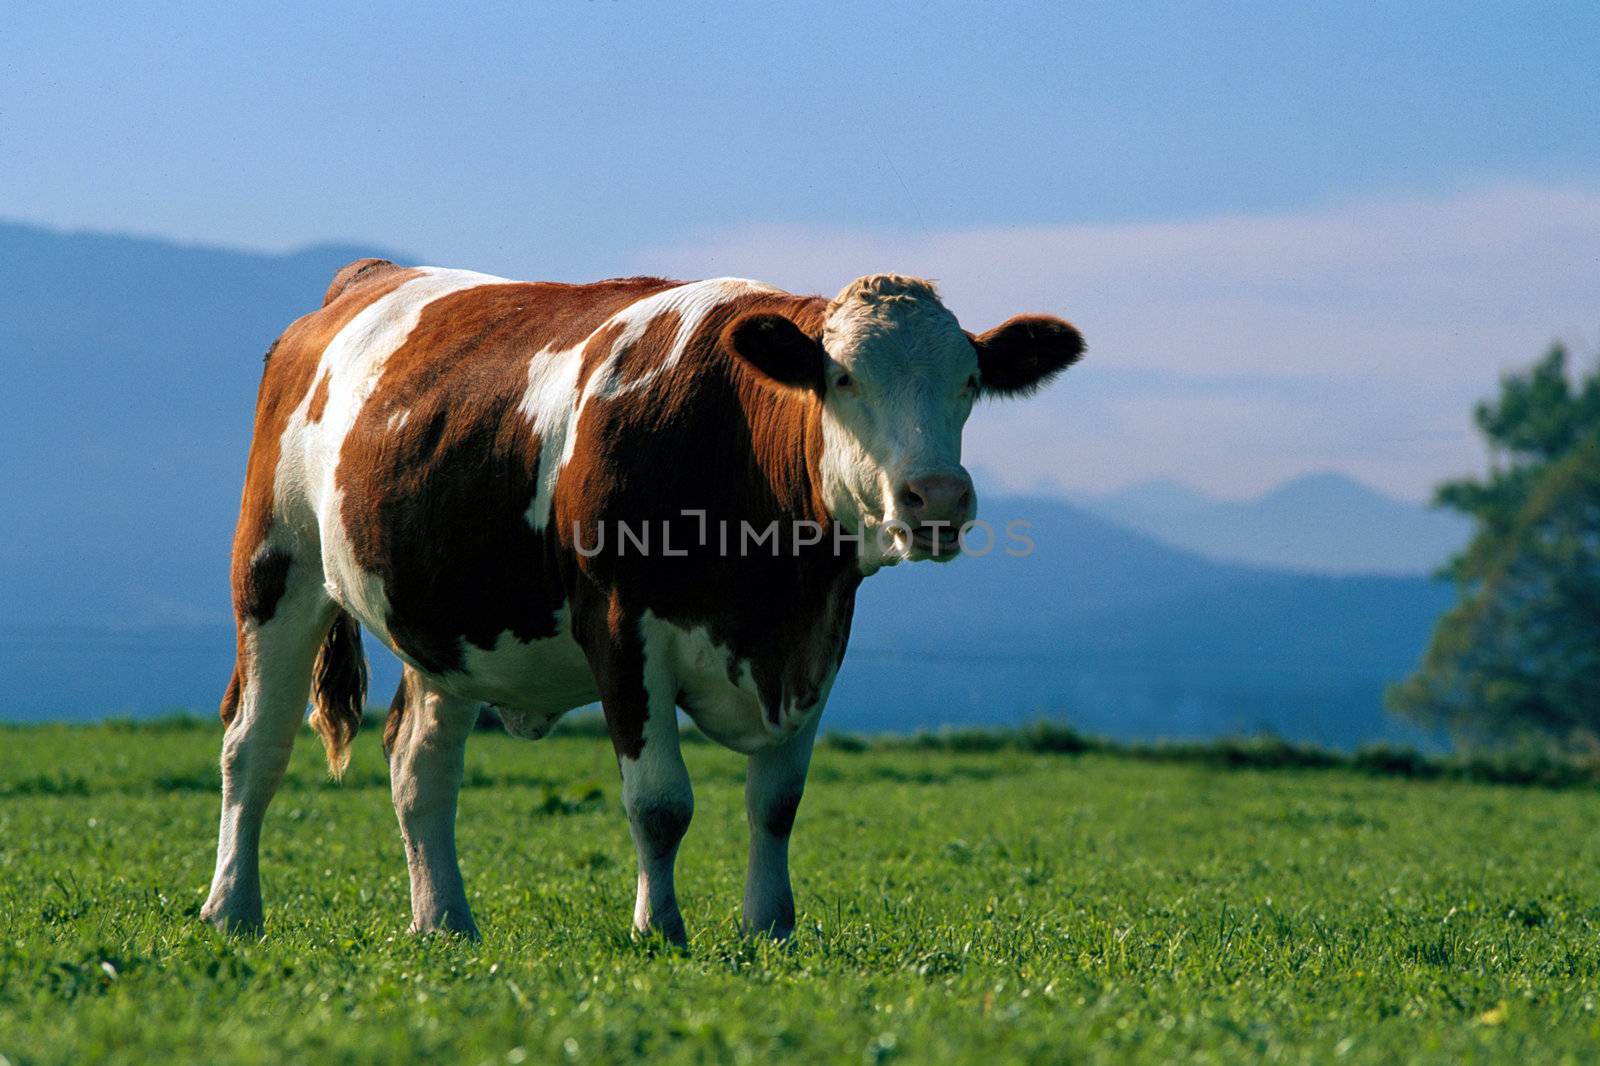 spotty bull on the green field